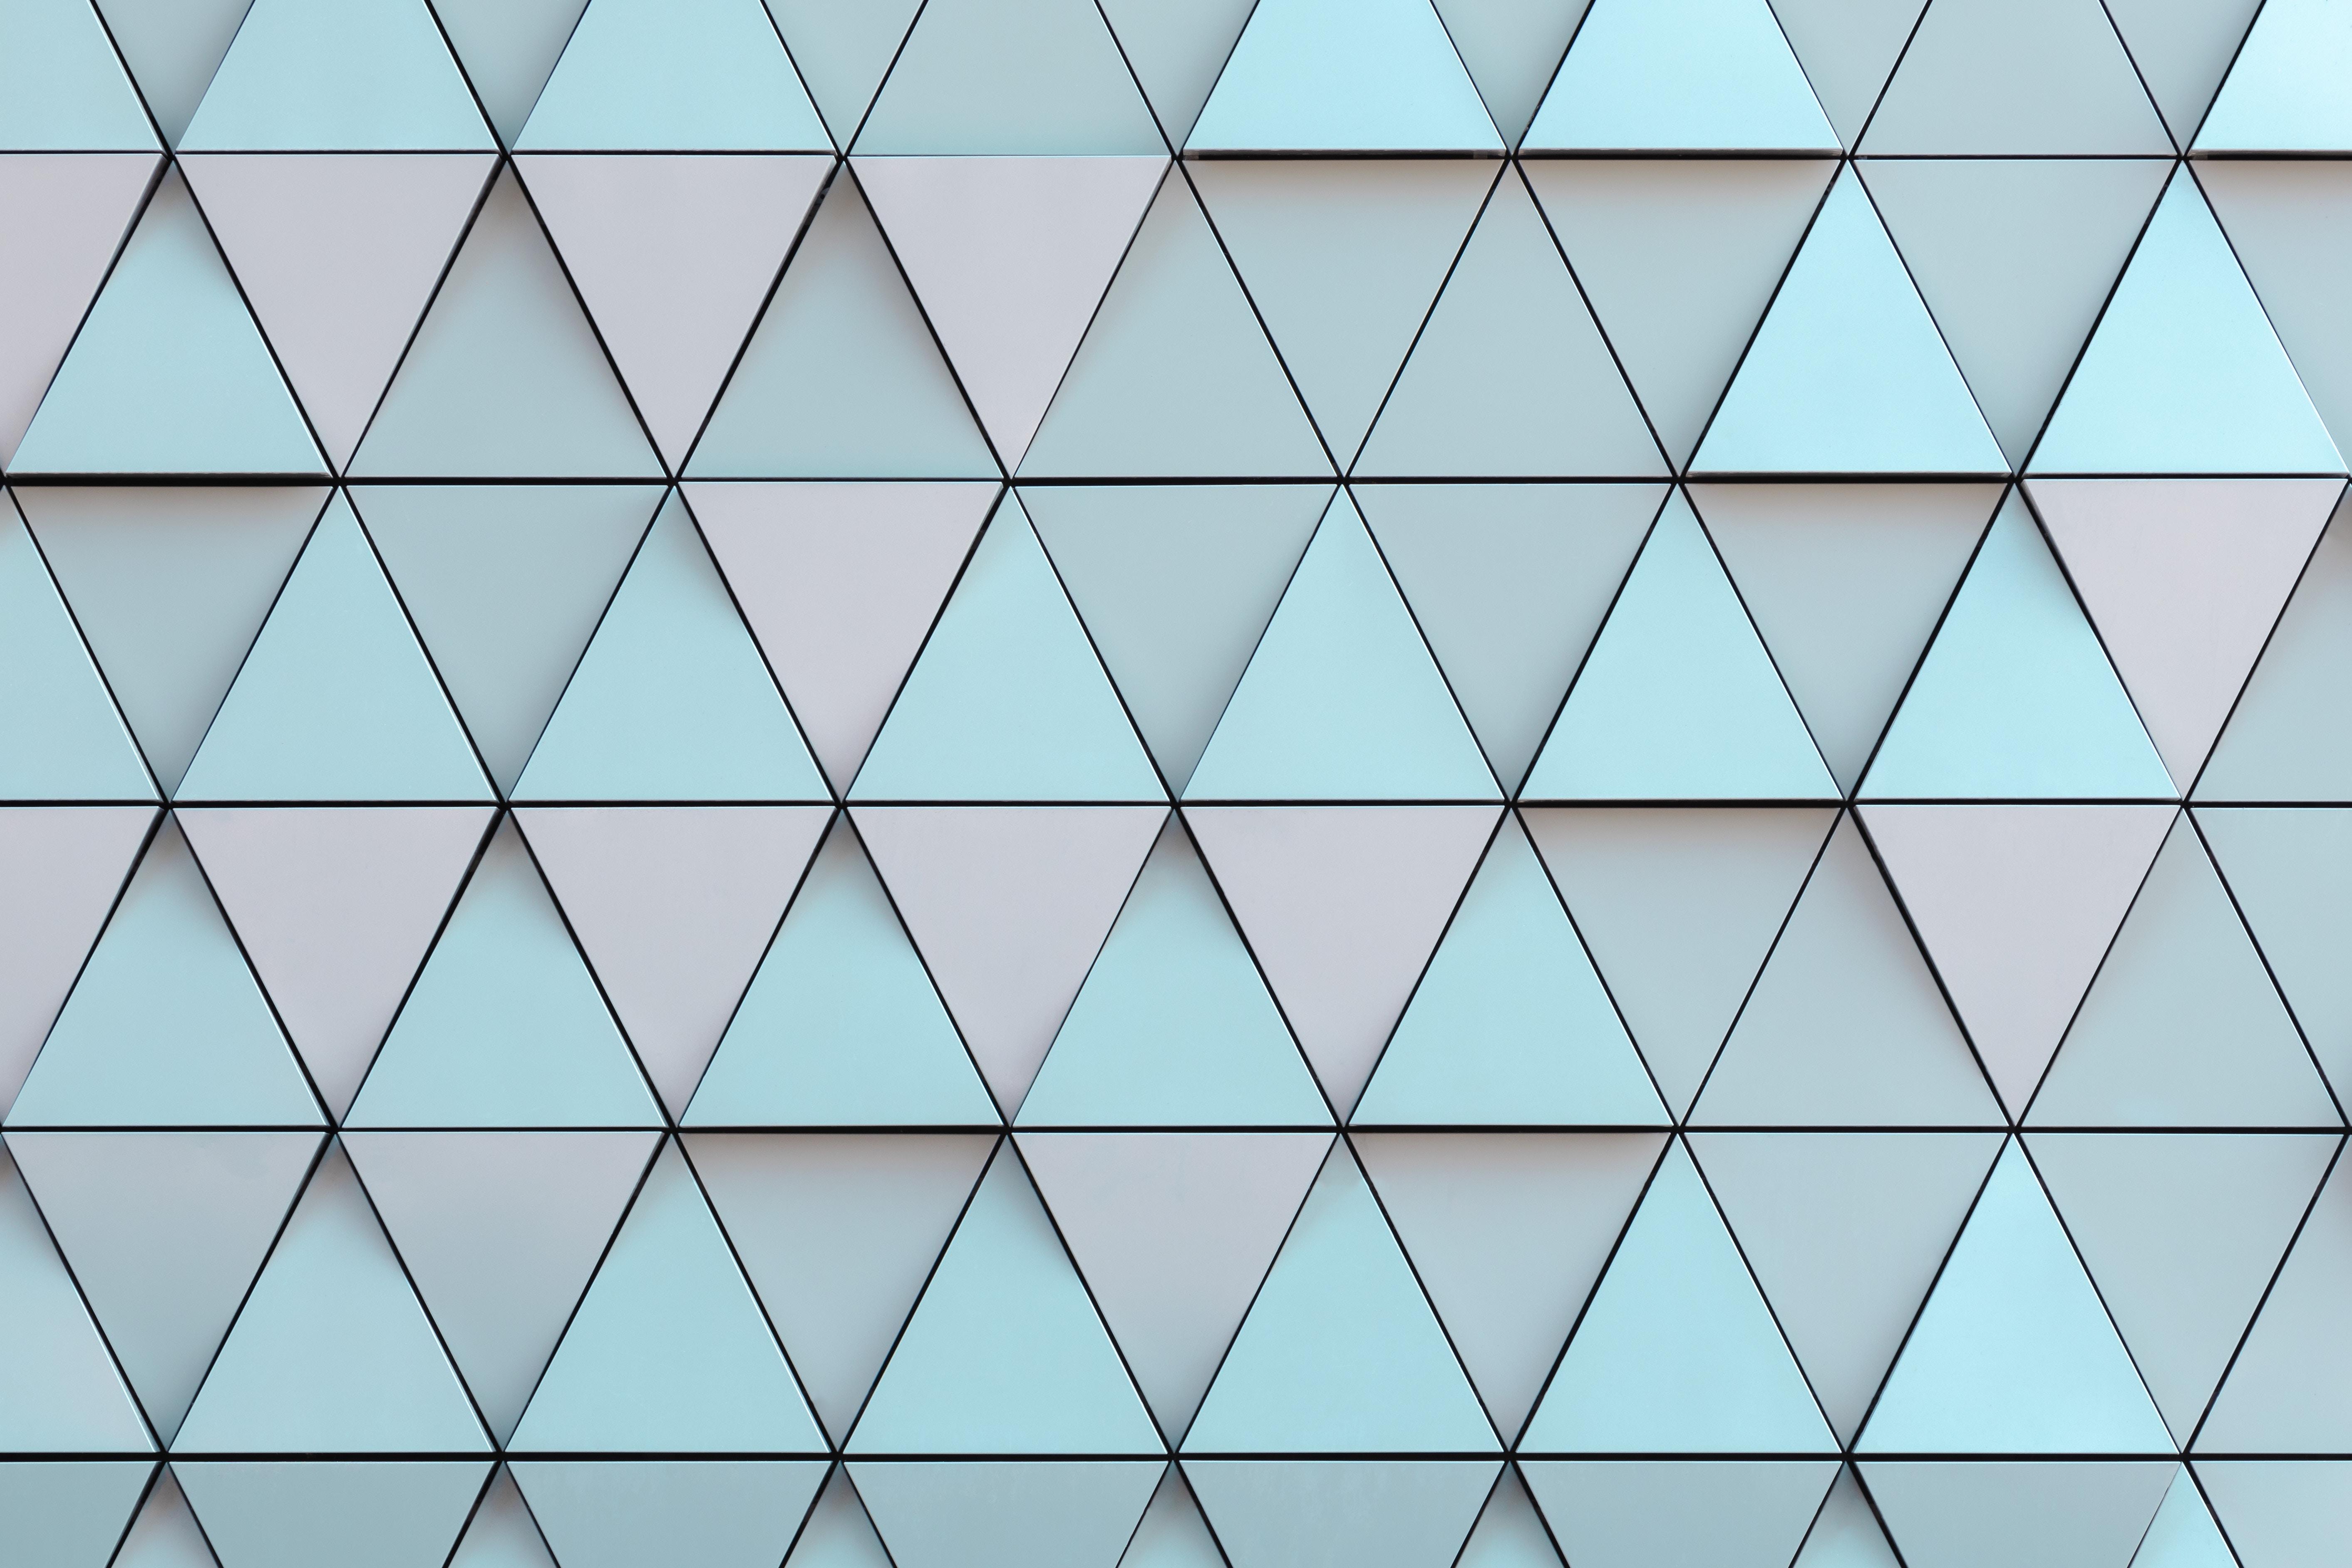 5652x3768 #Free image, #geometry, #pink, #building structure, #minimalist, #diagonal, #architecture, #minimal wallpaper, #surface, #color, #minimal, #horizontal, #line, #triangle, #wall, #minimal geometrical shape, #blue, #pattern. Mocah.org